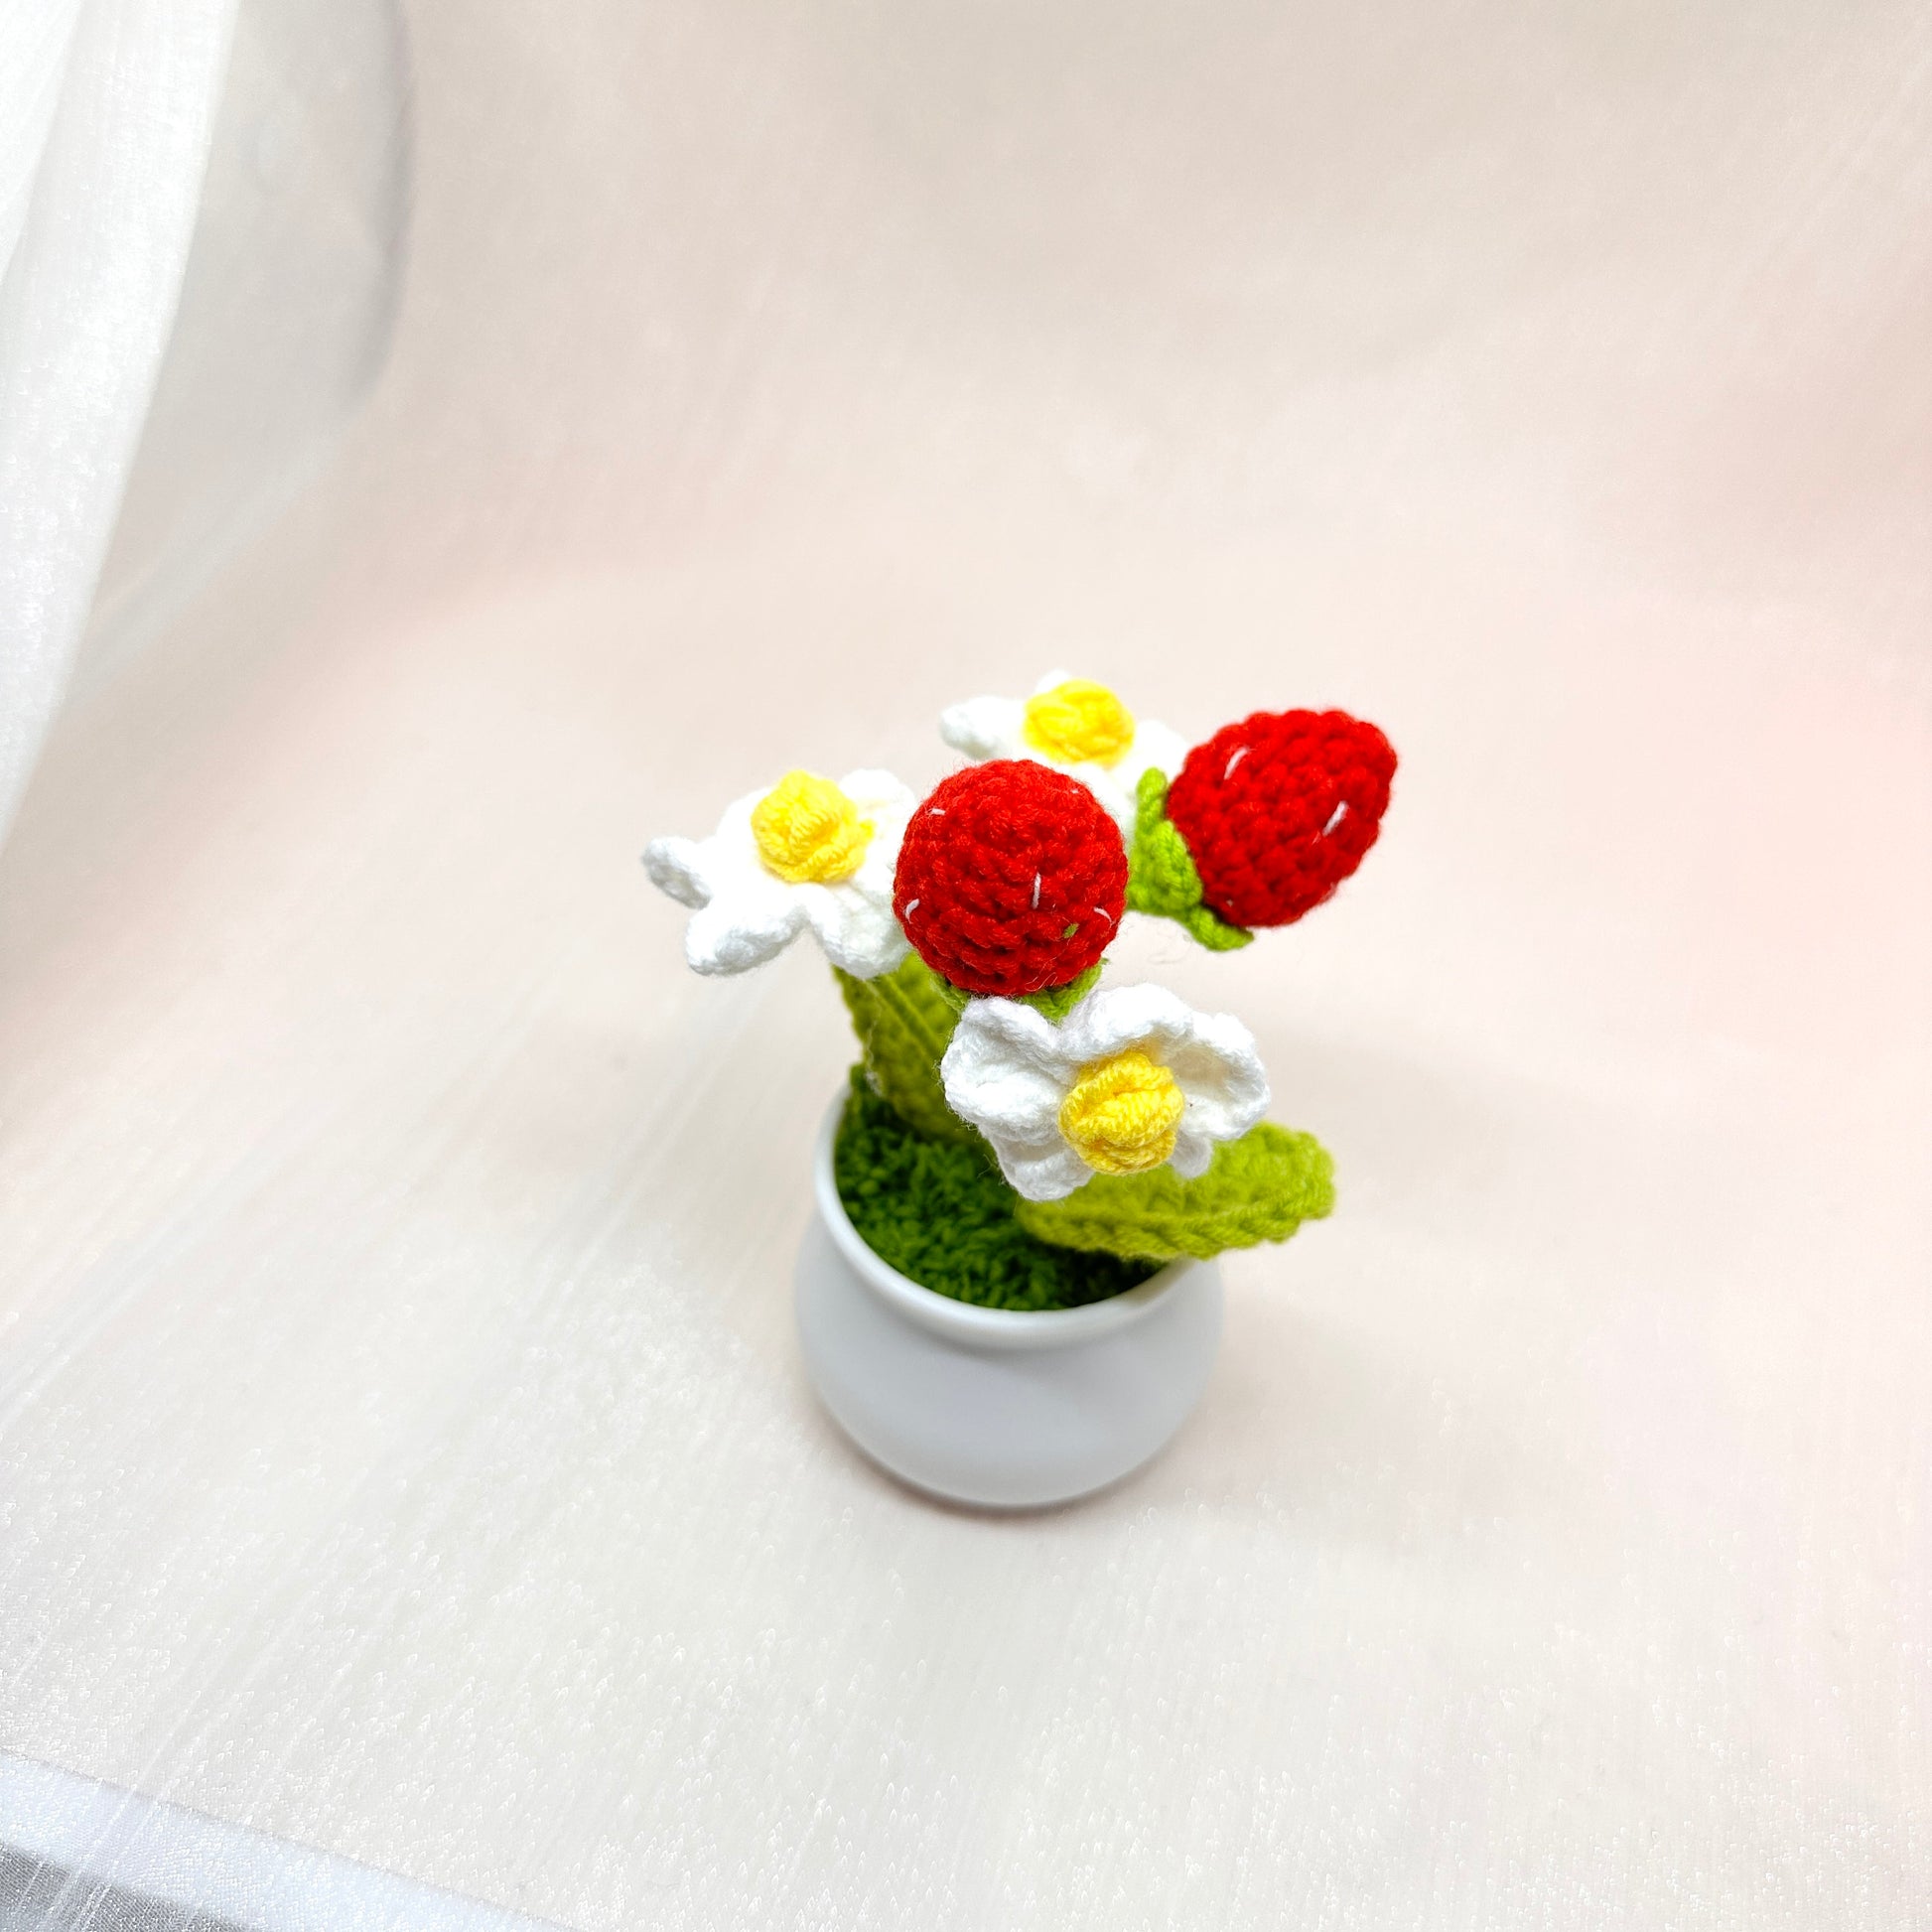 Crochet Strawberries Plant, Handmade Knitted Plants, Gift Ideas, Decorative Flower, Car Decoration, Creative Gift Idea